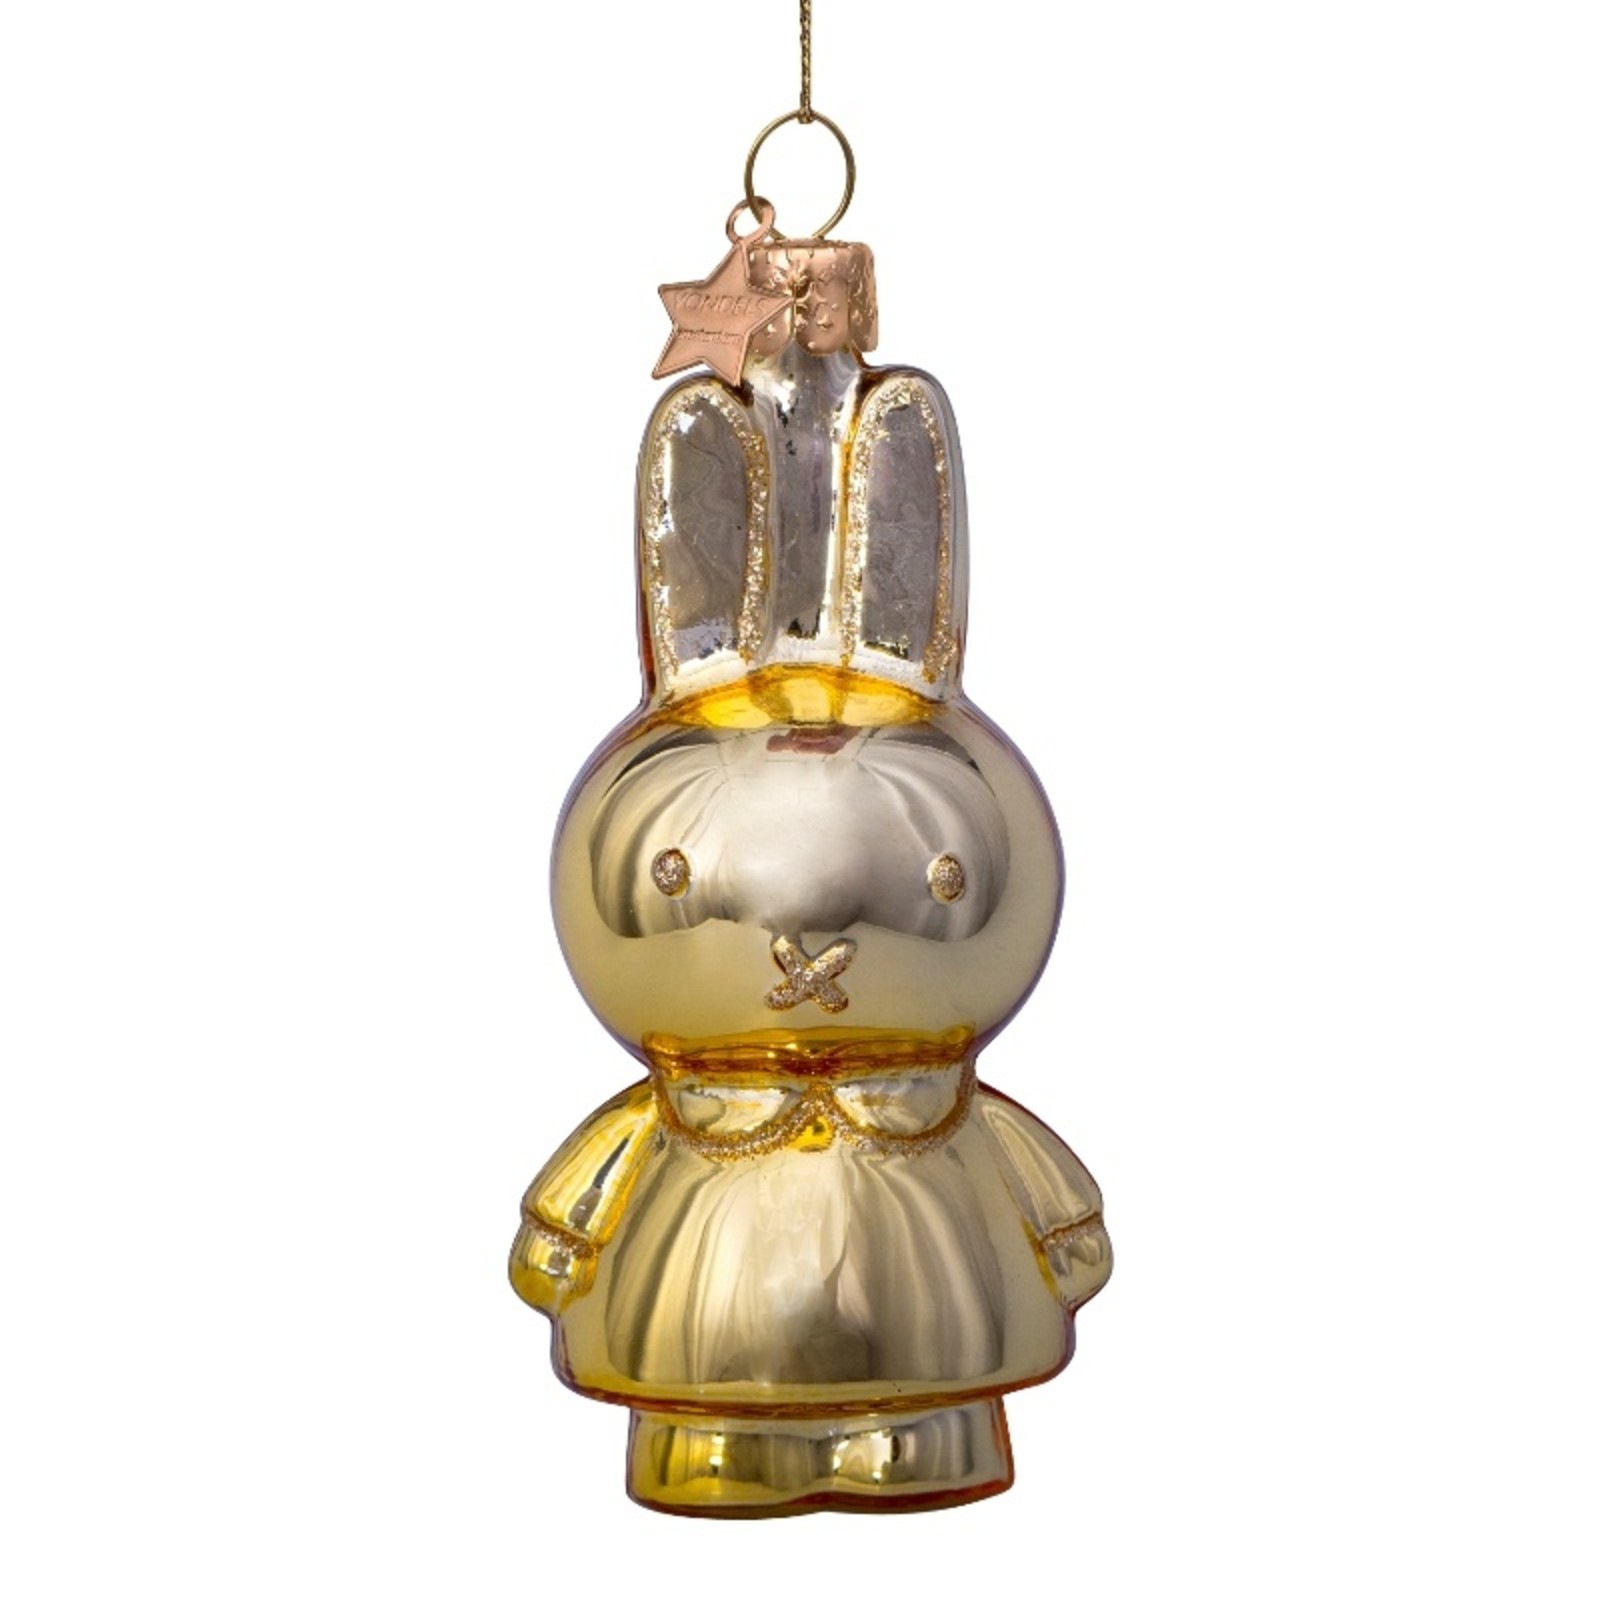 Ornament glass miffy allover shiny gold 11cm - 4"